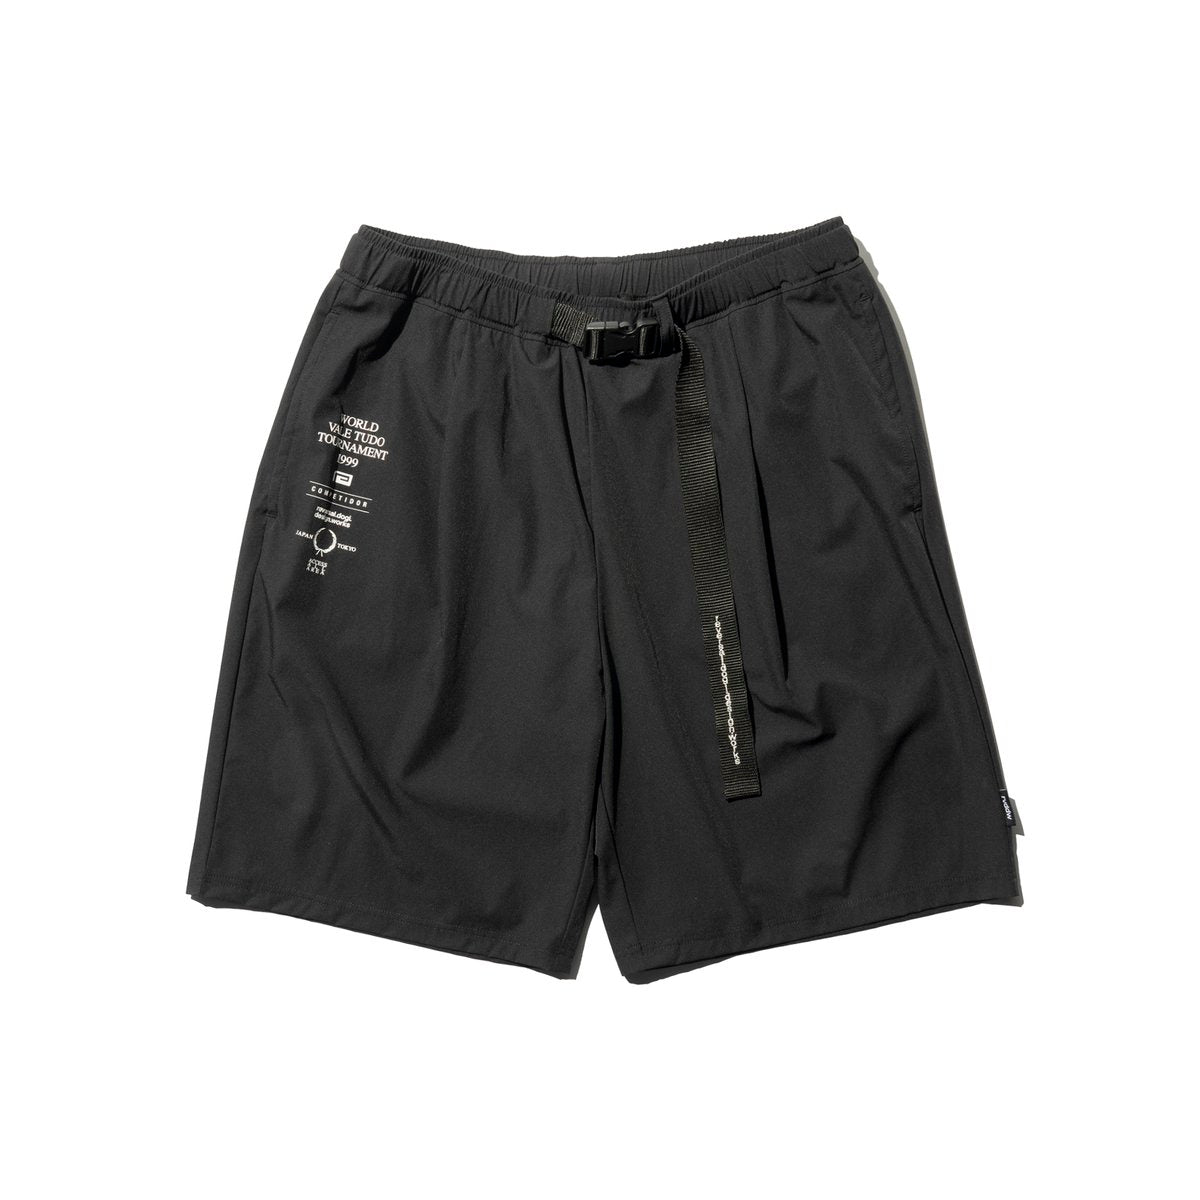 RVDDW 4WAY Dry Shorts-Reversal RVDDW-ChokeSports